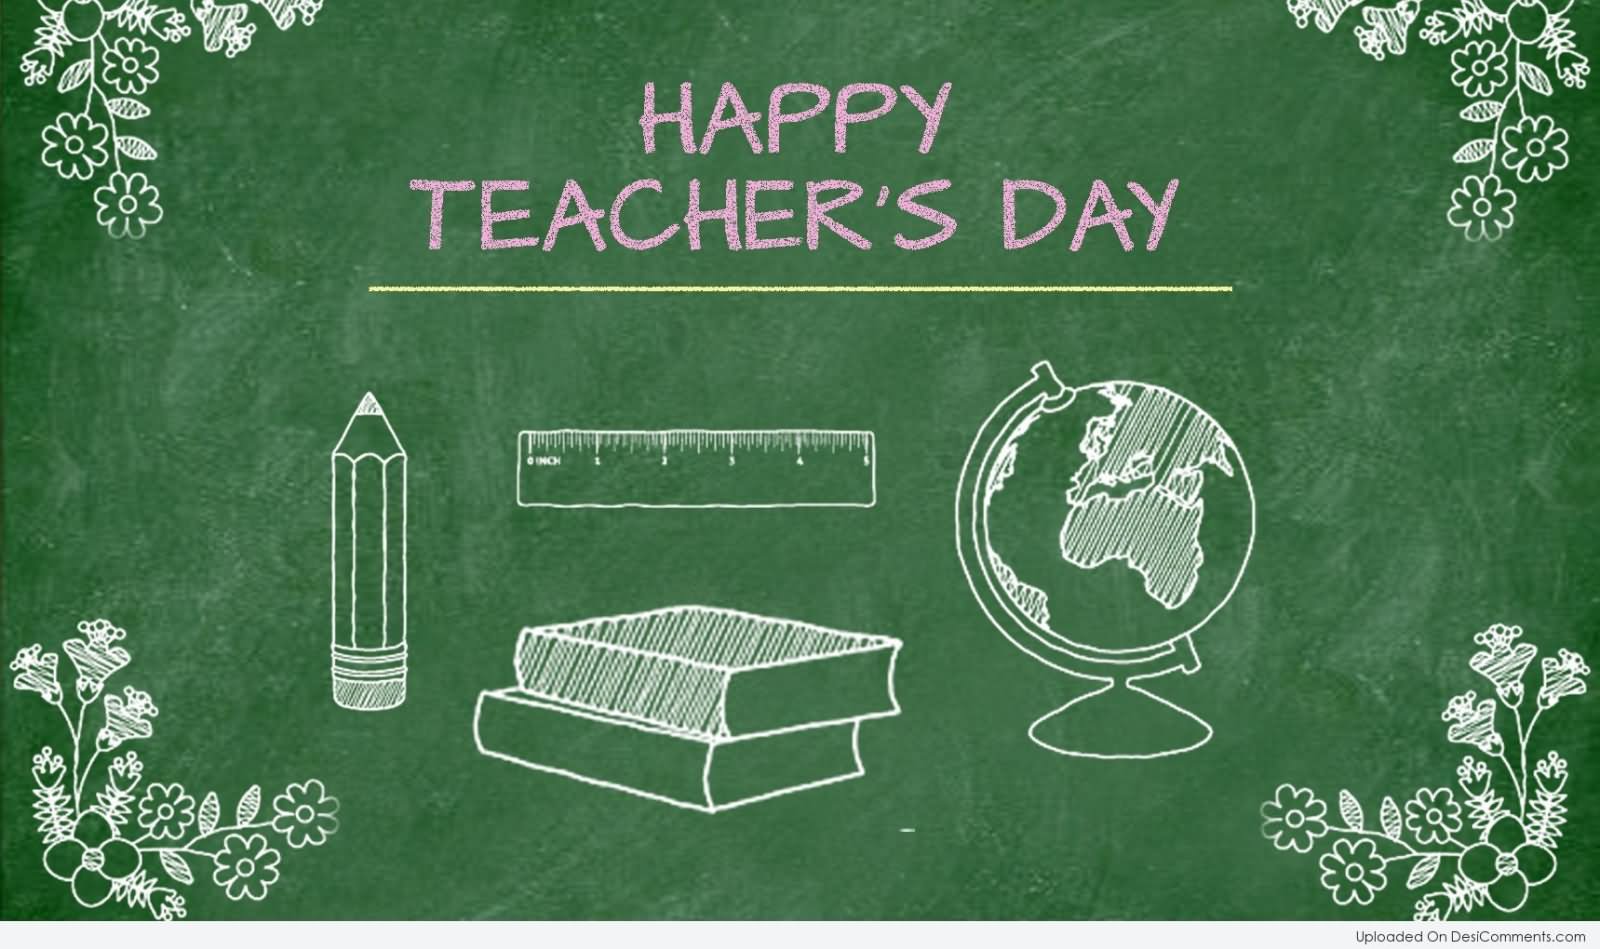 Happy Teacher’s Day 2016 Wishes